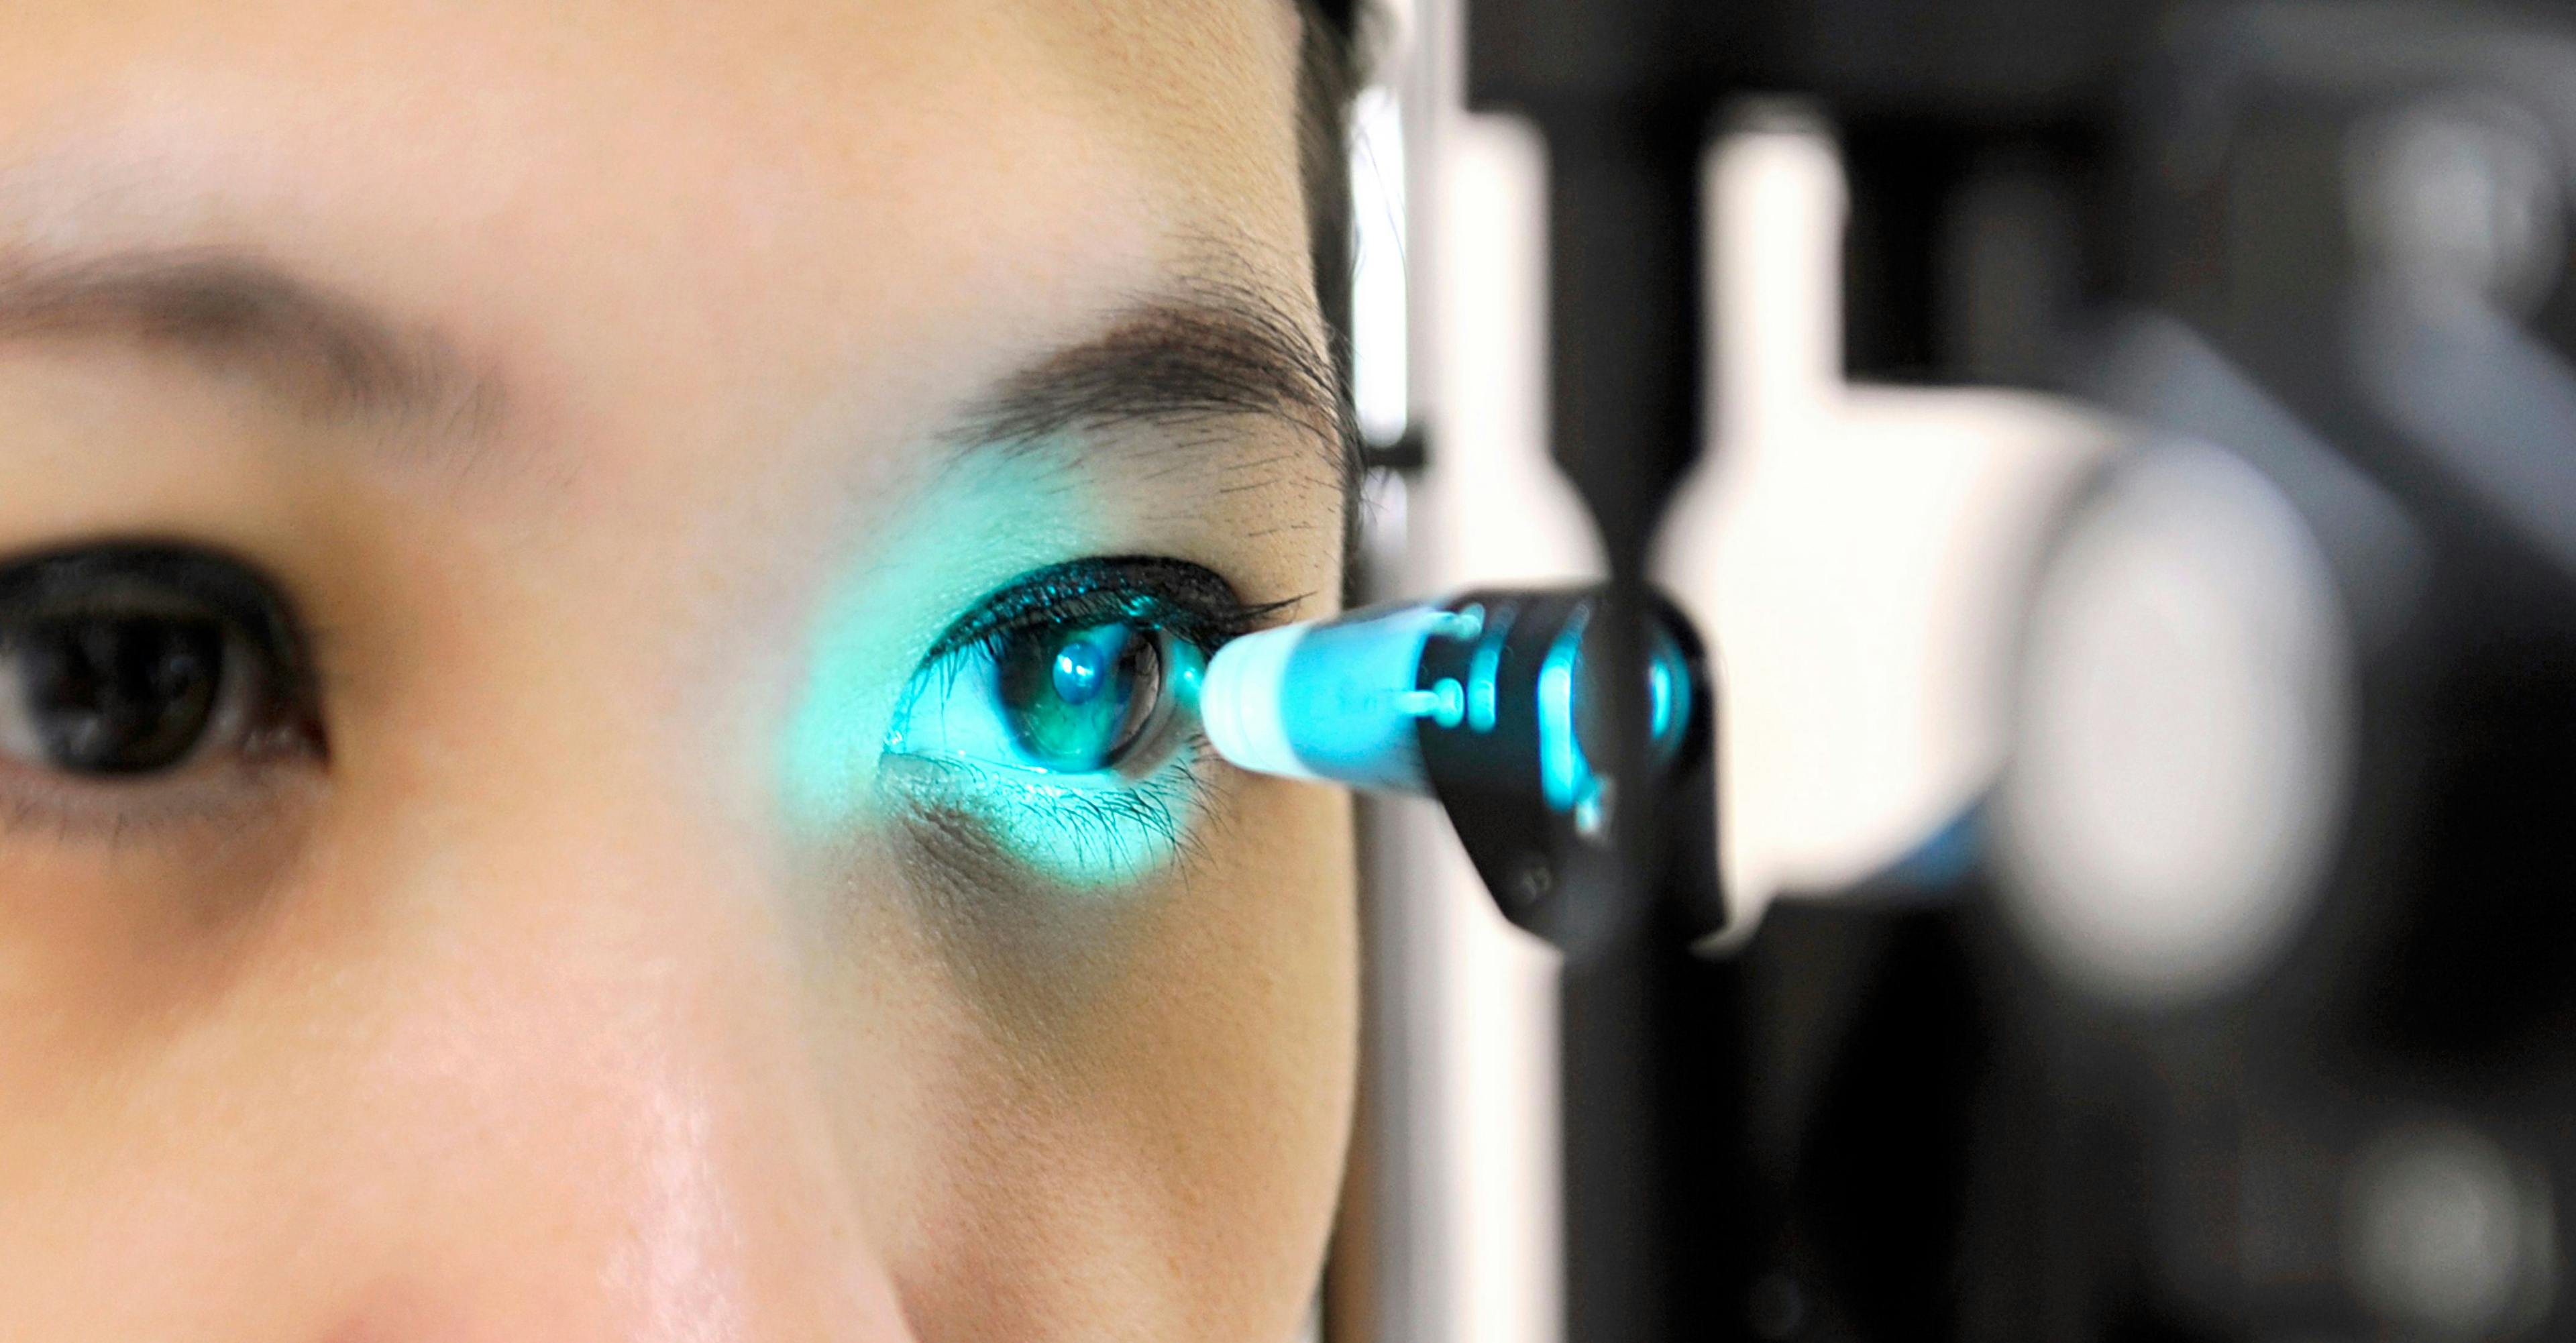 Tonometry test for eye pressure | Image credit: eyeadobestock - stock.adobe.com